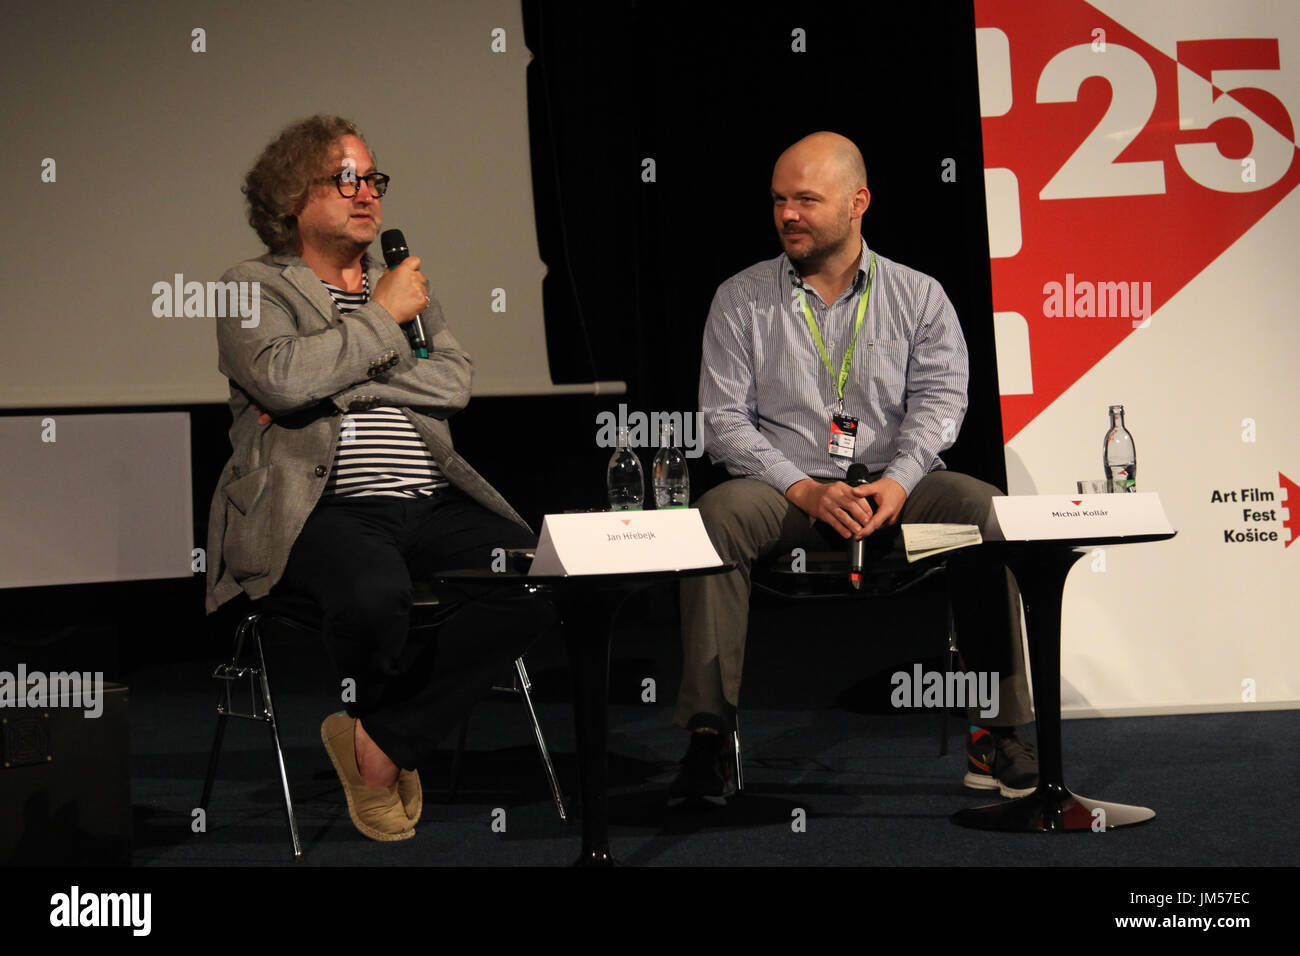 24 June 2017, Czech film director Jan Hřebejk (left) talks during a masterclass at the Art Film Fest, Kosice, Slovakia. Stock Photo